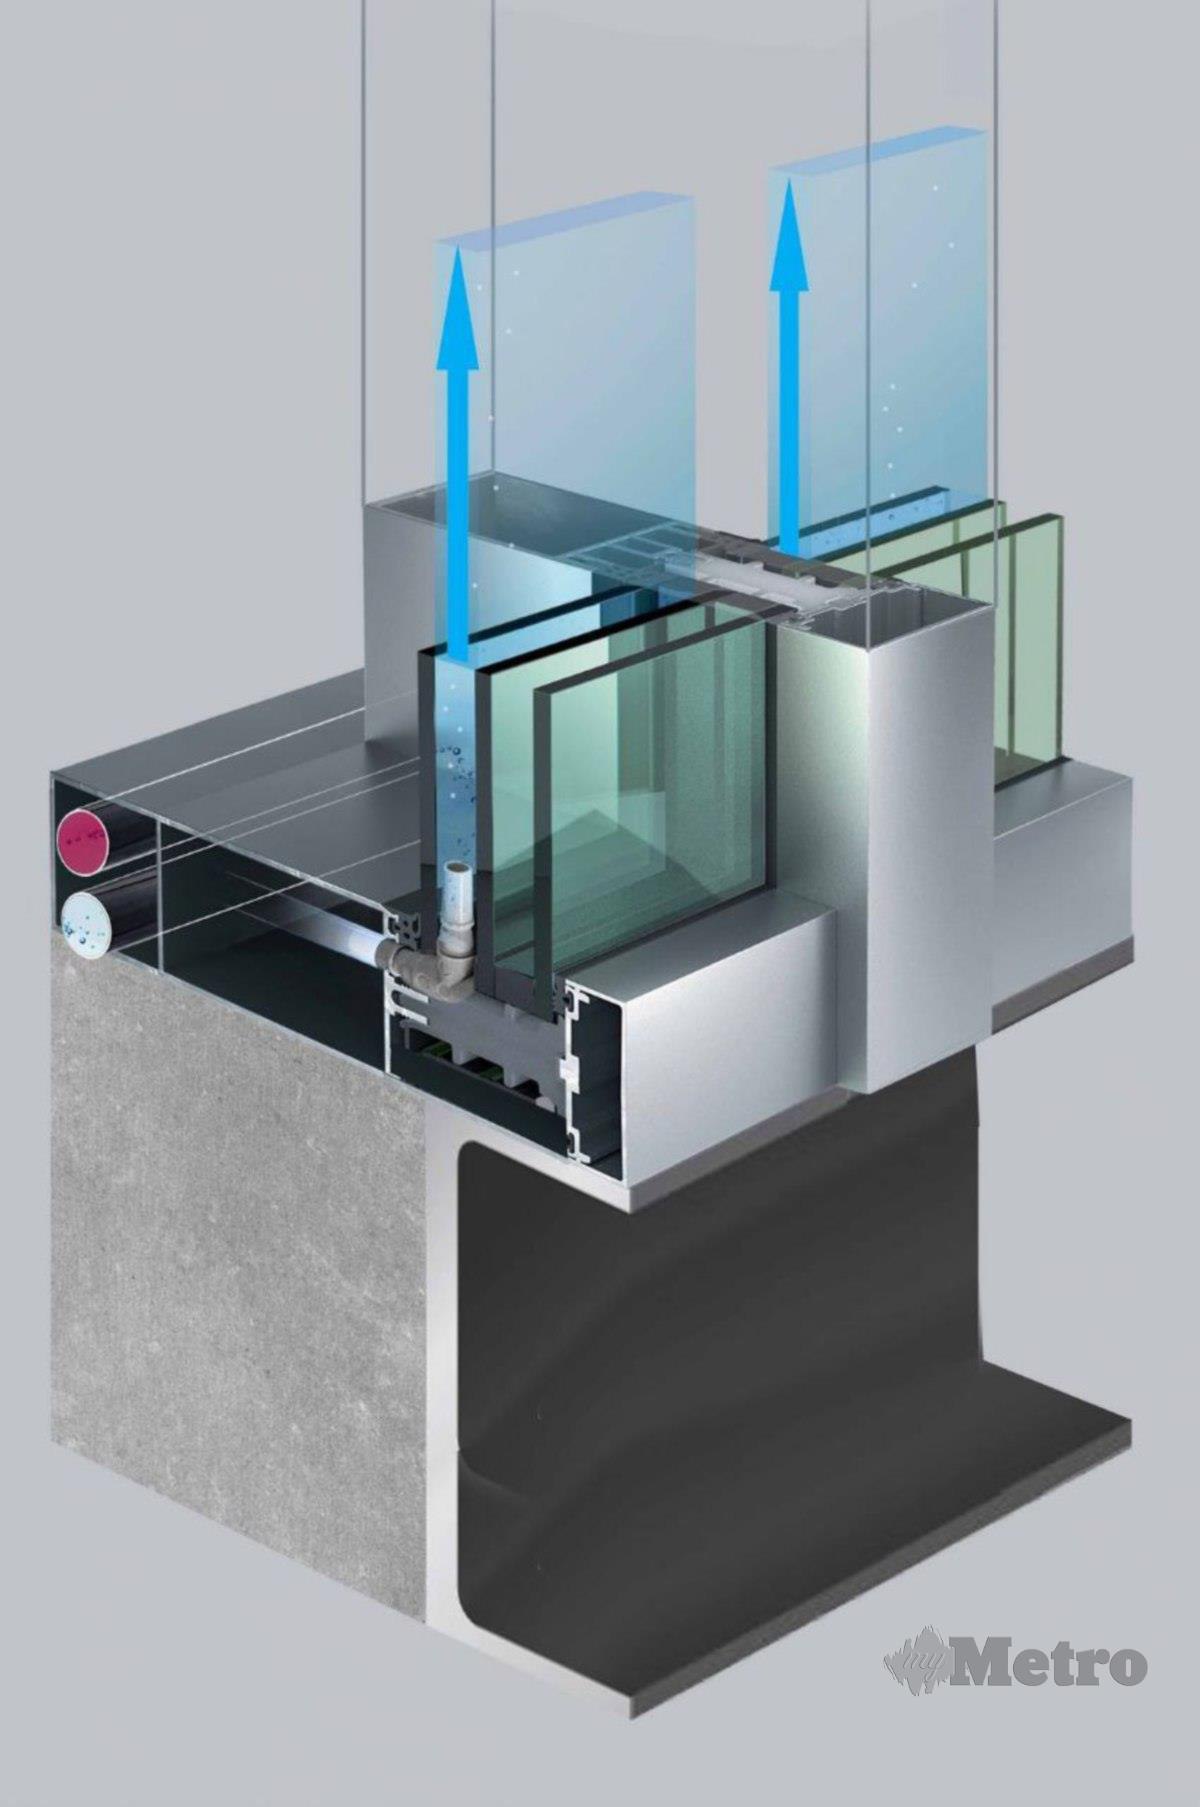 MEKANISME dalam inovasi kaca menggunakan air sebagai penyerap haba dan penyejuk suhu persekitaran.